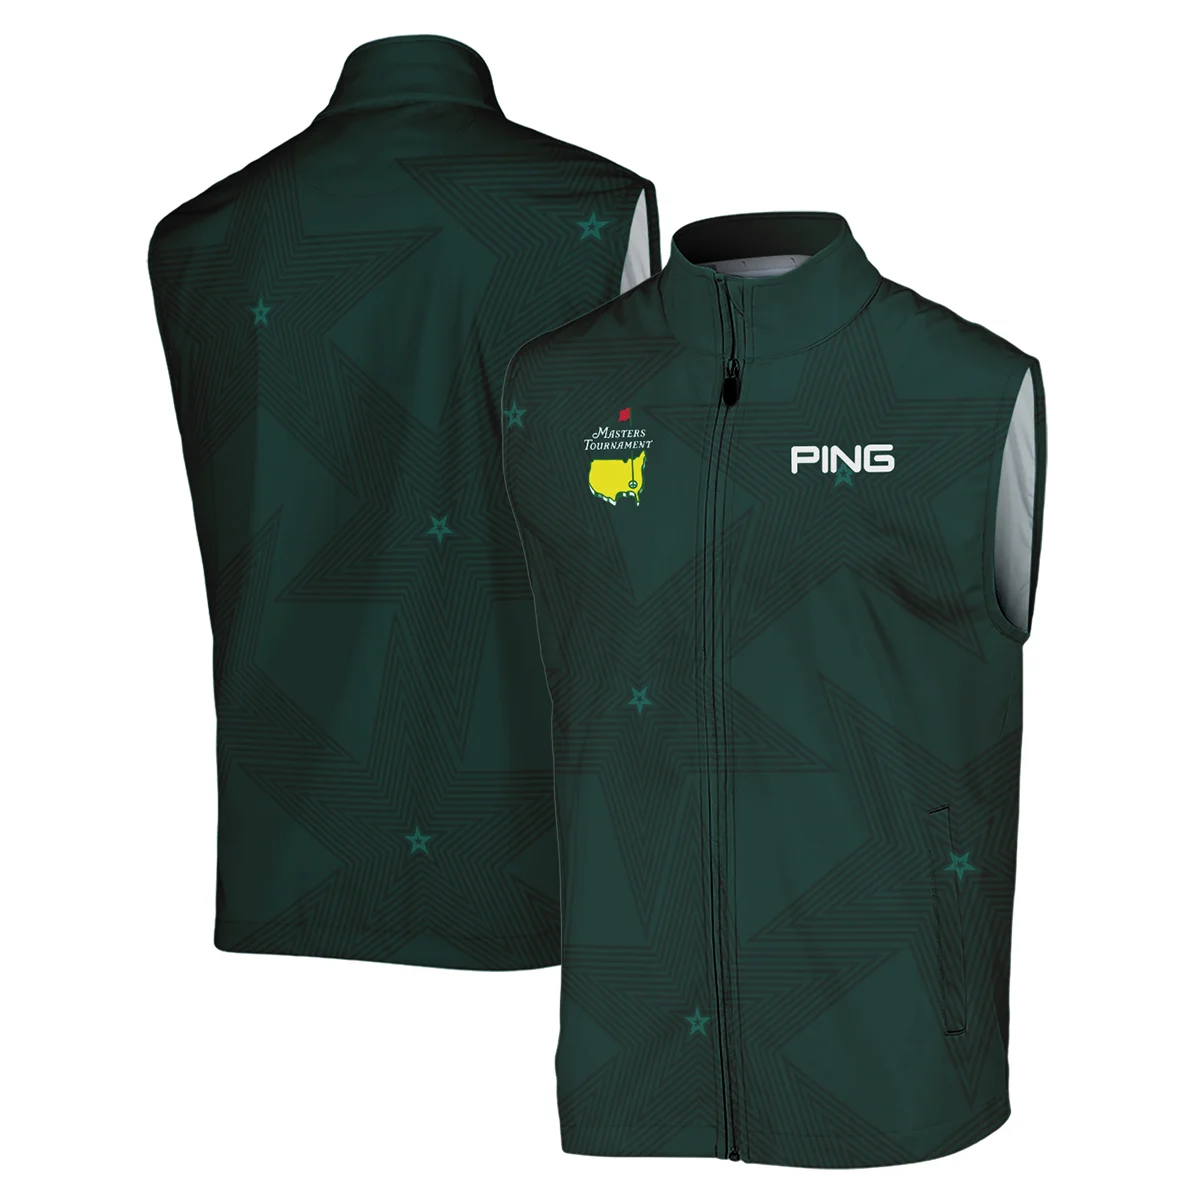 Golf Sport Masters Tournament Ping Quarter-Zip Jacket Sports Star Sripe Dark Green Quarter-Zip Jacket